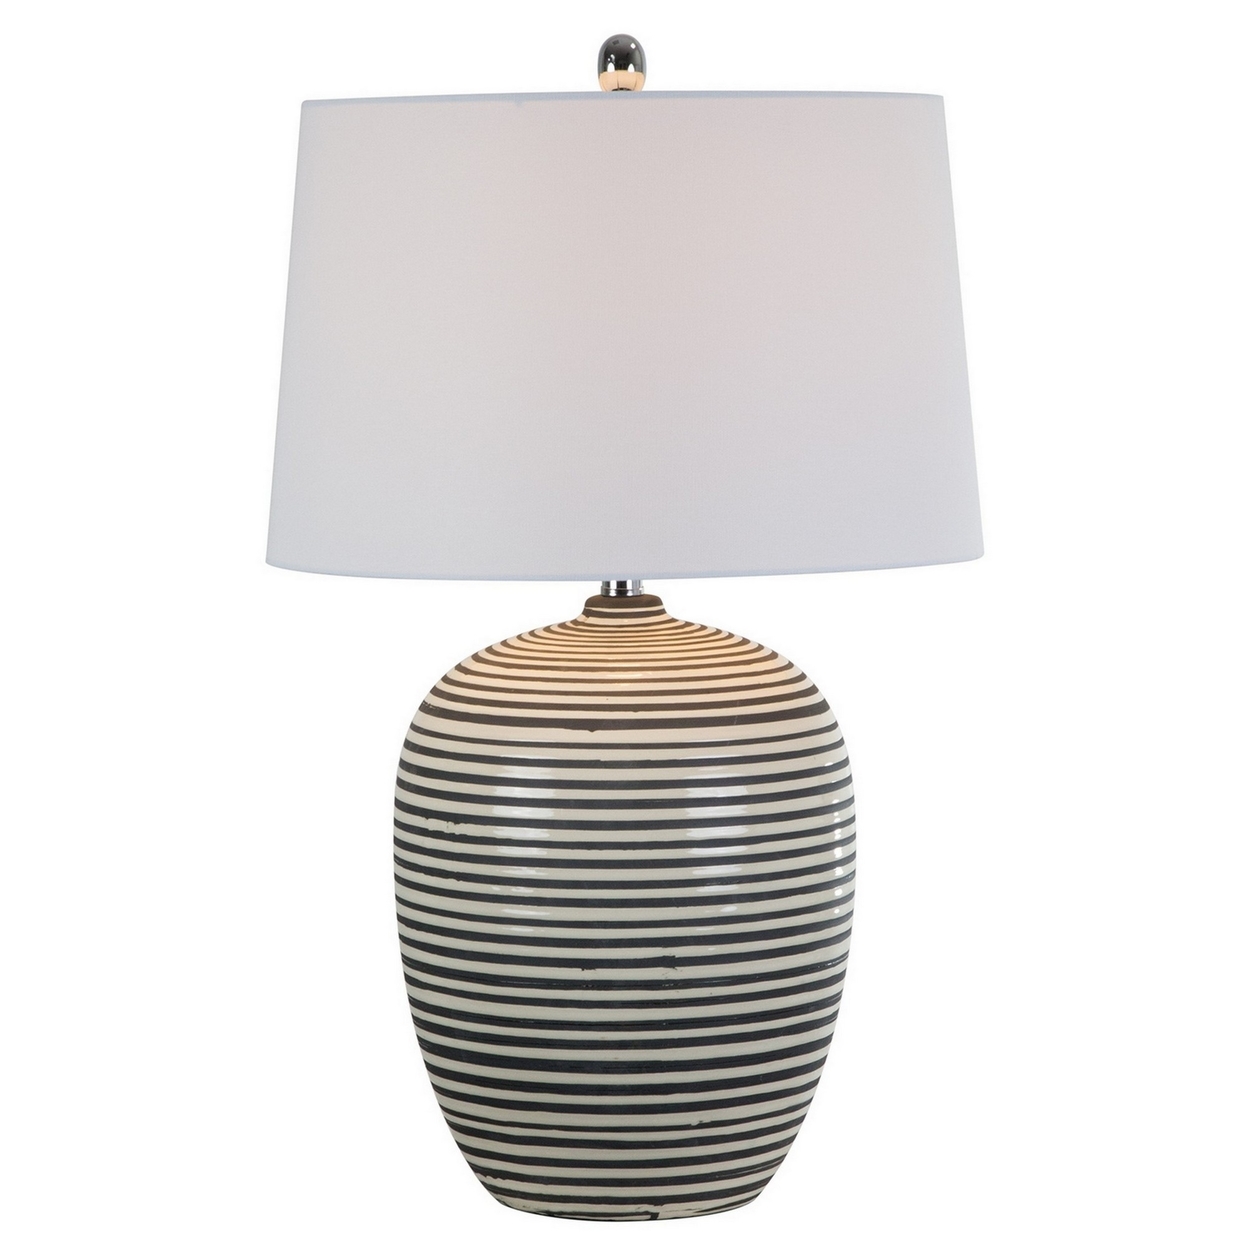 28 Inch Table Lamp, Lined Design, Empire Shade, Ceramic, Beige Taupe -Saltoro Sherpi